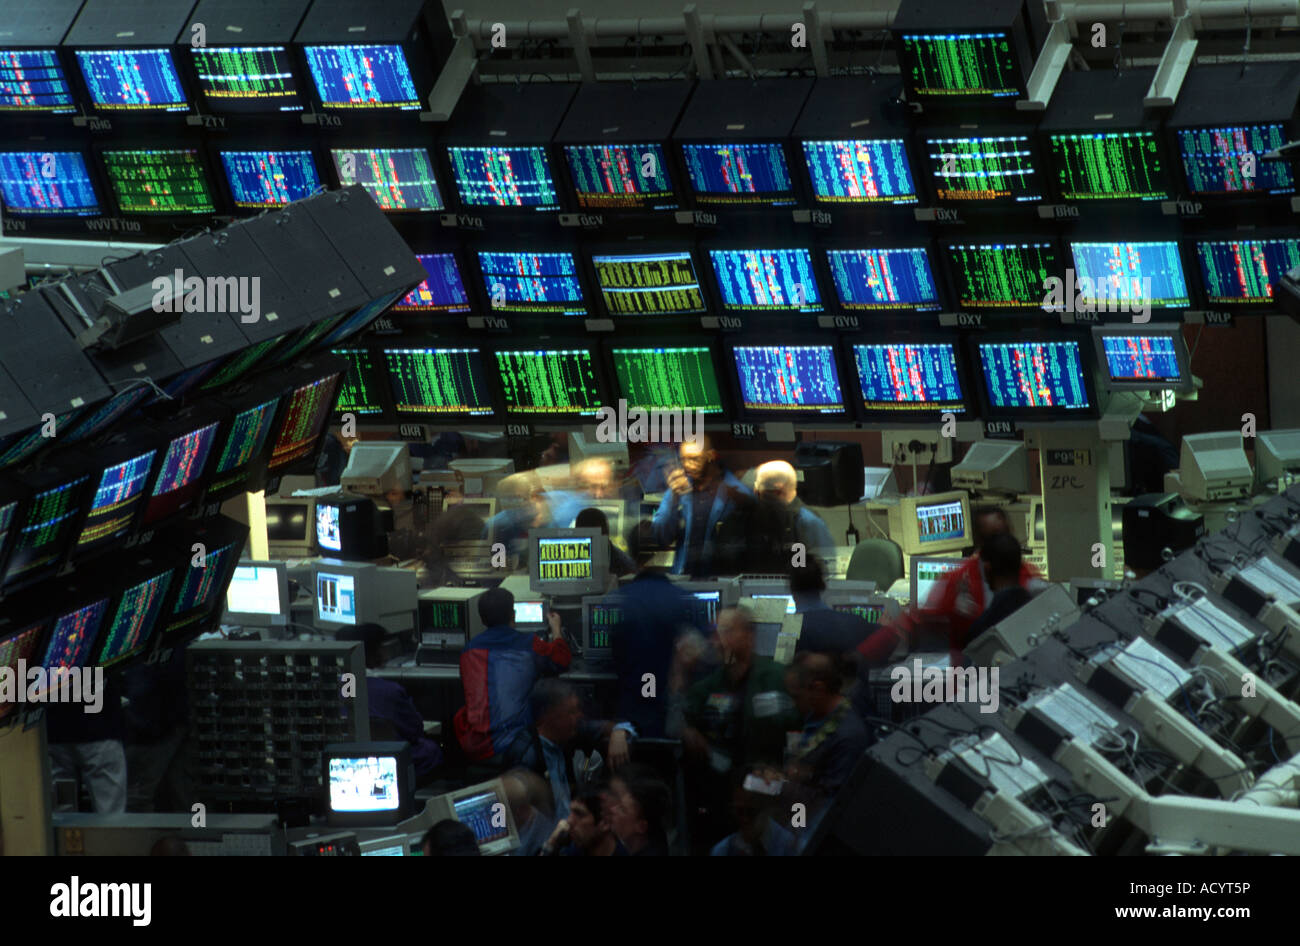 Moderna elettronica stock exchange bourse broker del mercato Foto stock -  Alamy